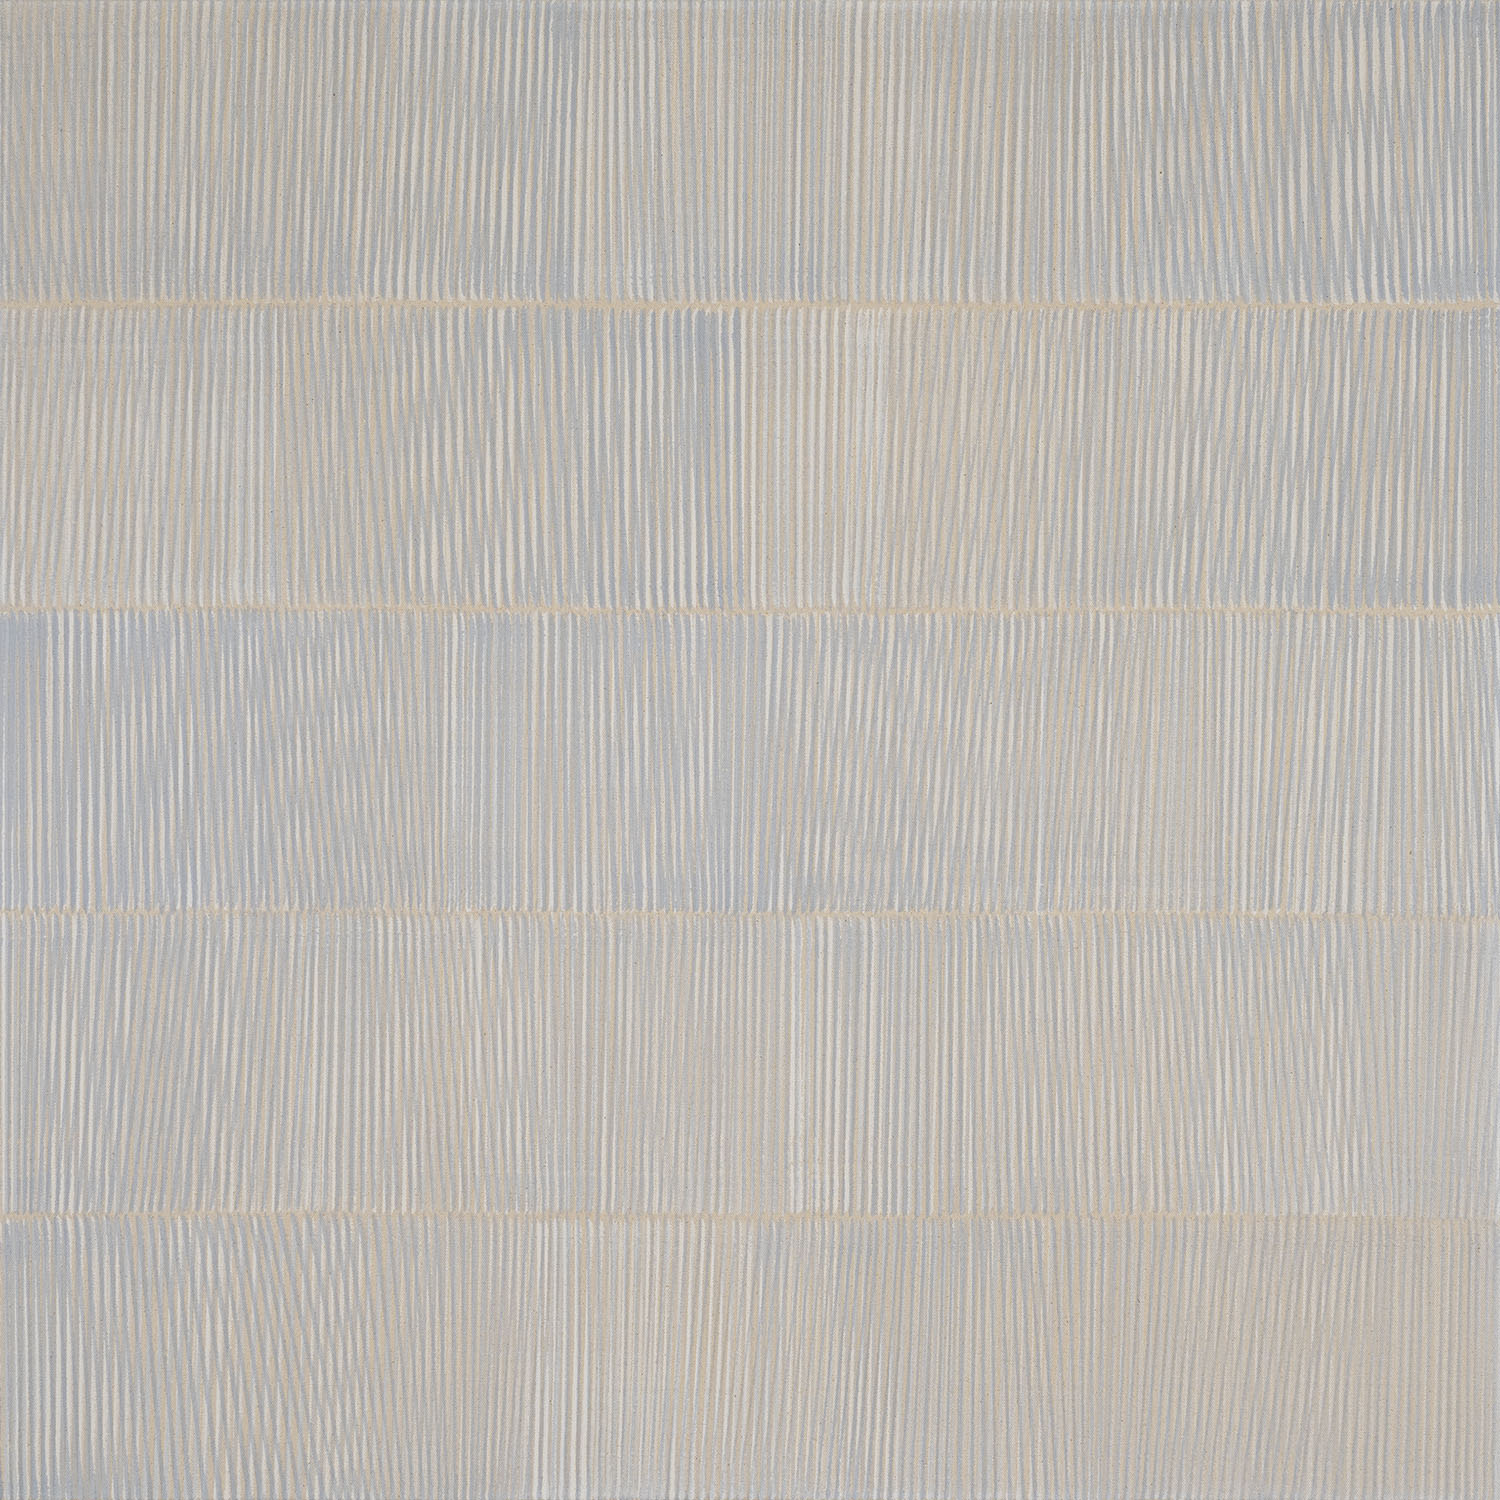 Nikola Dimitrov, Präludium, 2023, Pigmente, Bindemittel auf Leinwand, 100 x 100 cm